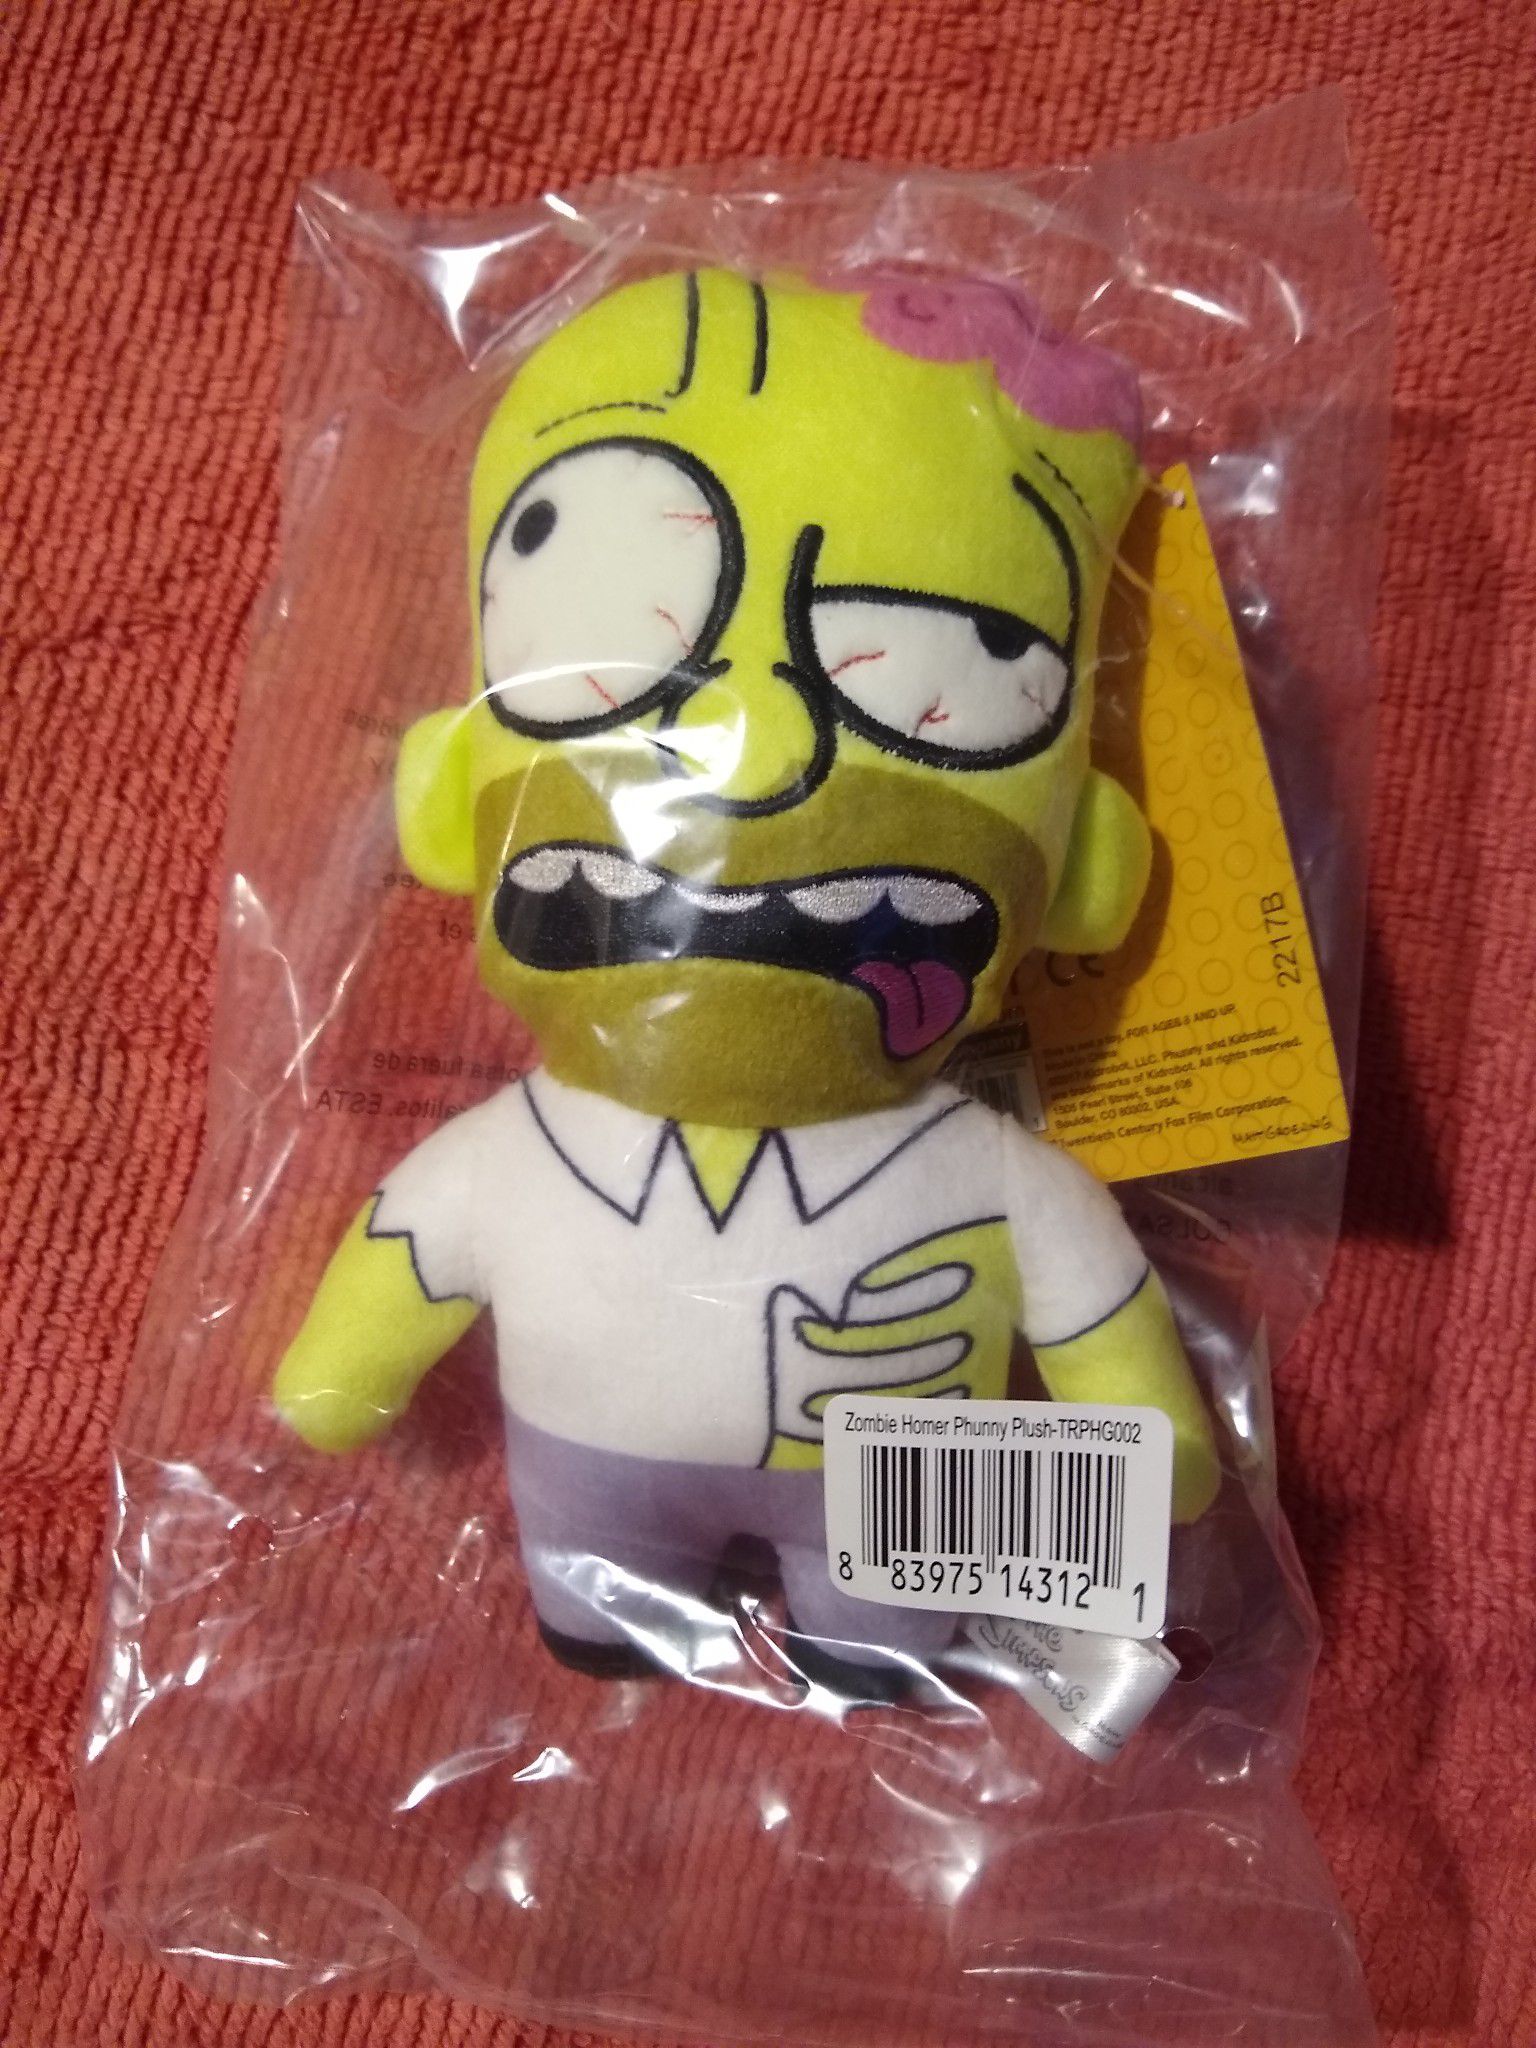 Zombie Homer Simpsons plushie